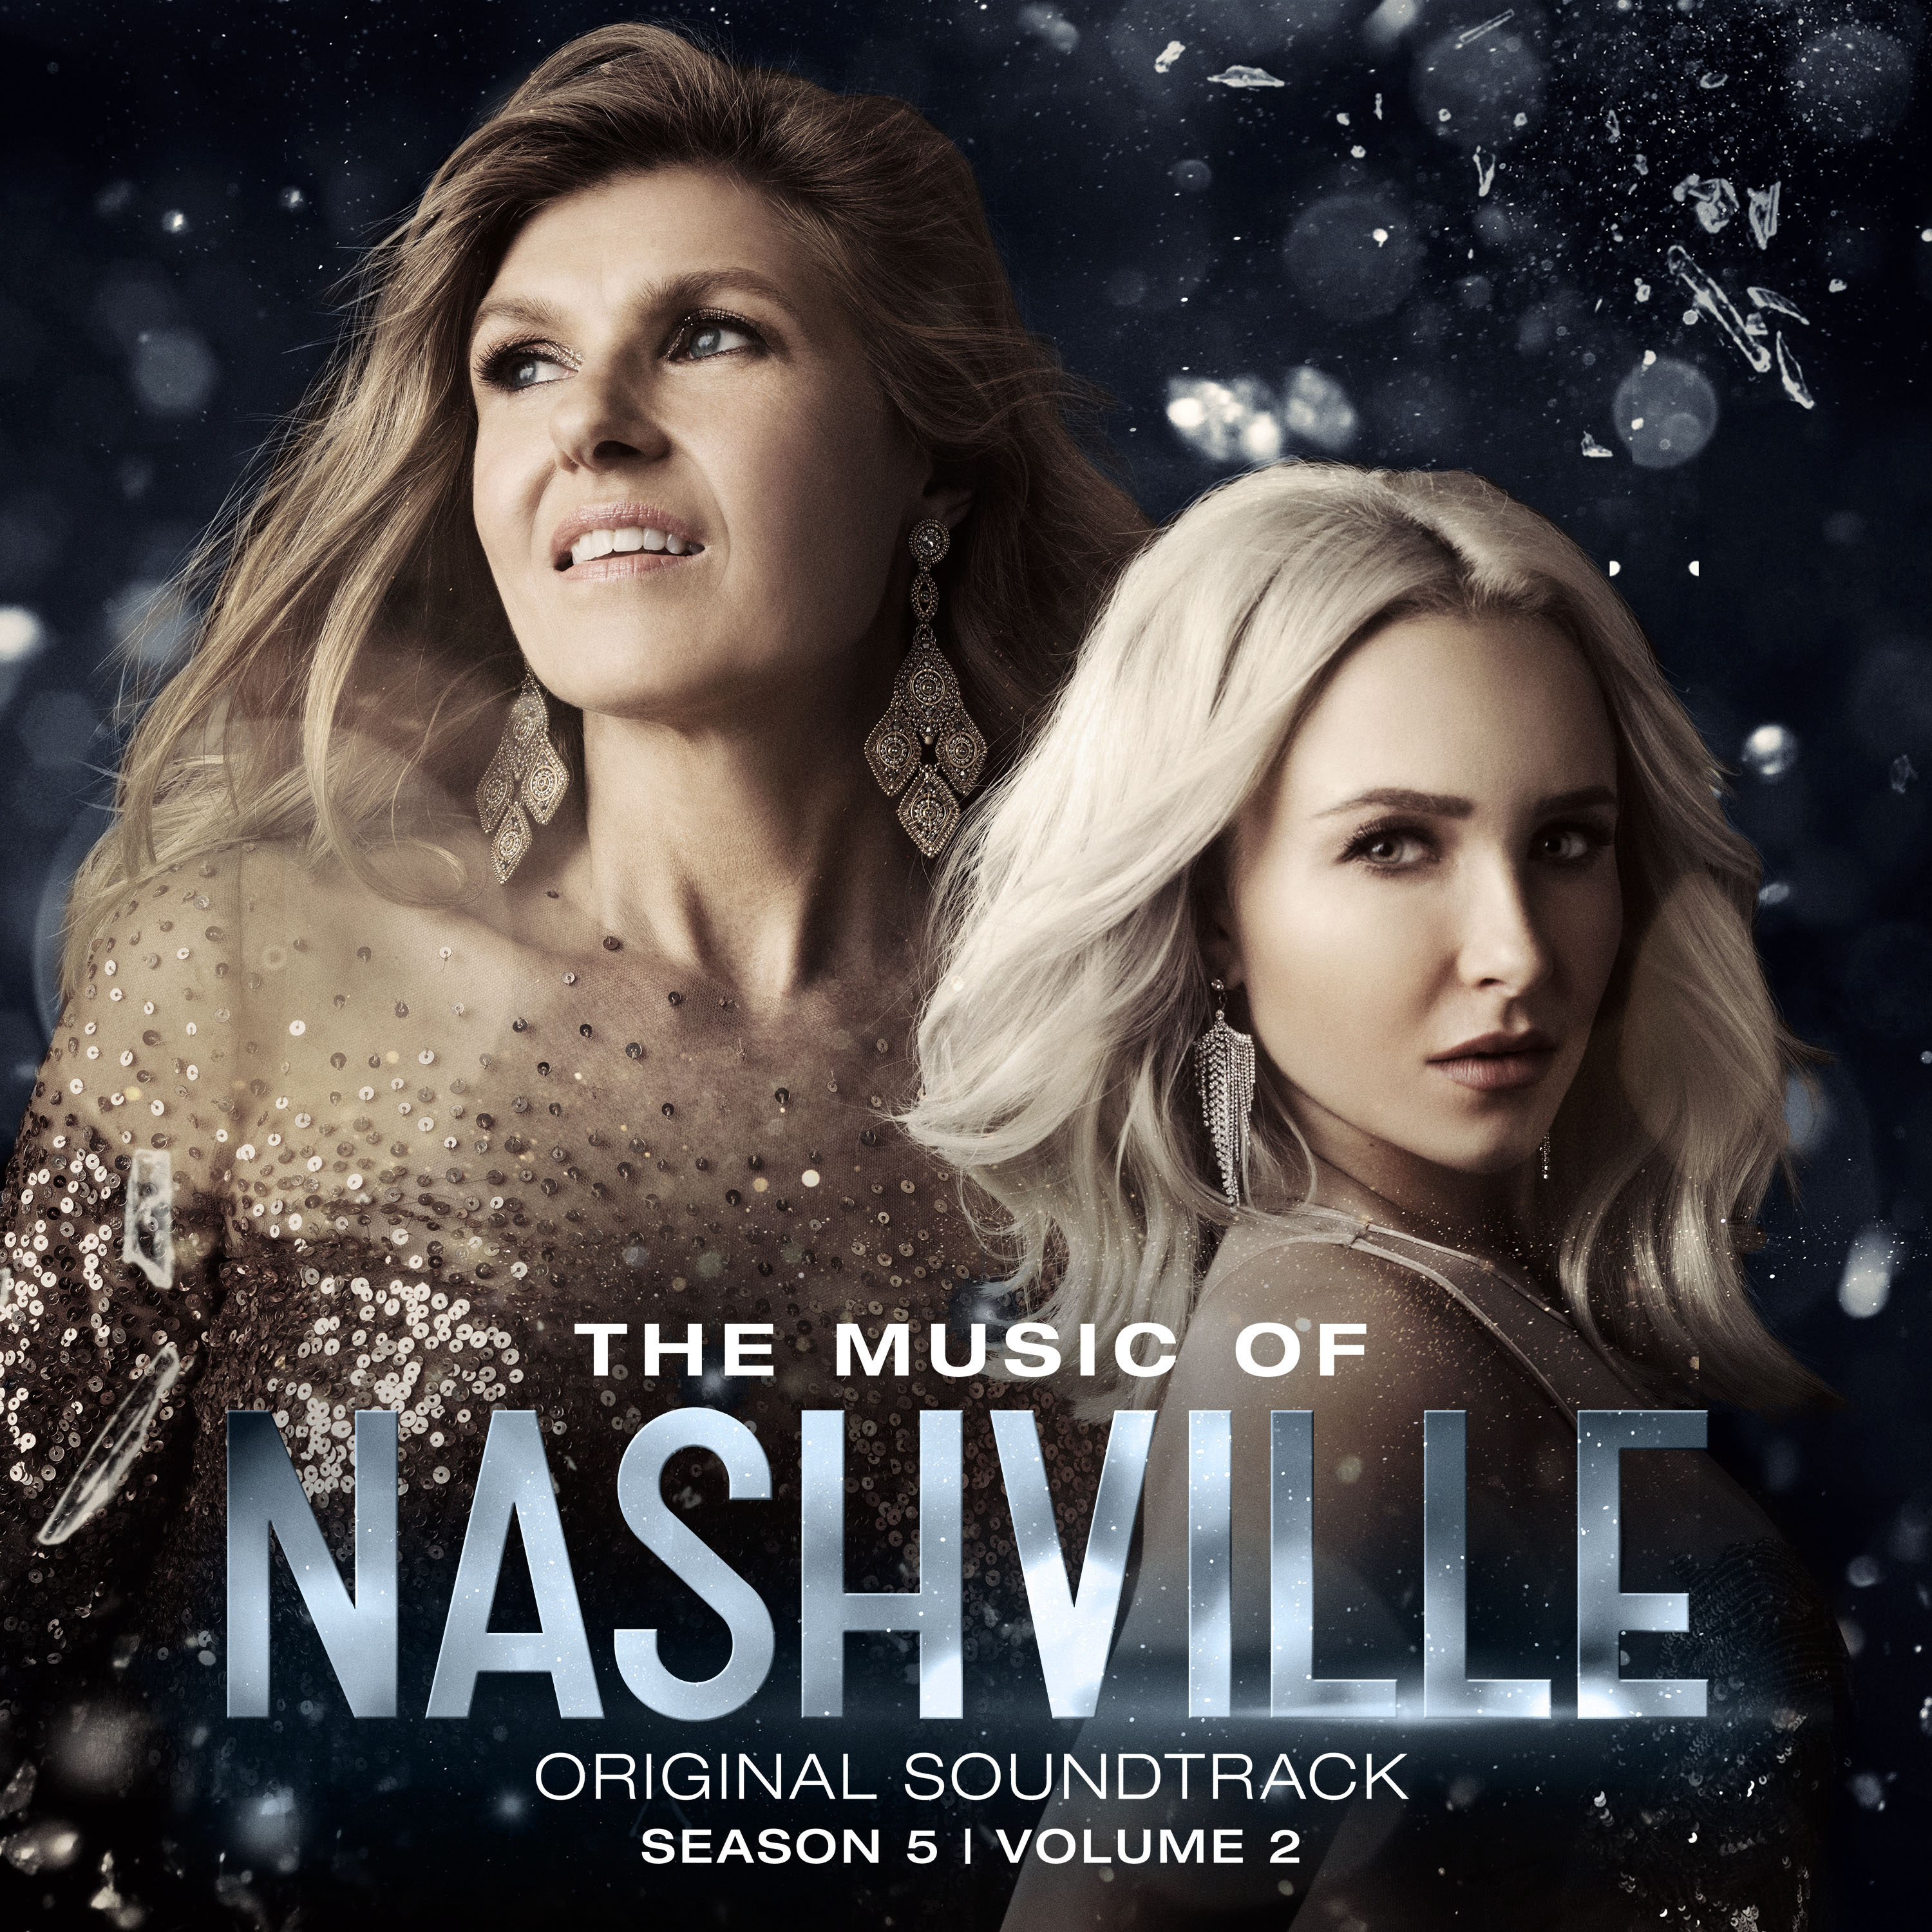 CMT’s Nashville Drops New Soundtrack “The Music of Nashville, Season 5 Volume 2” Today